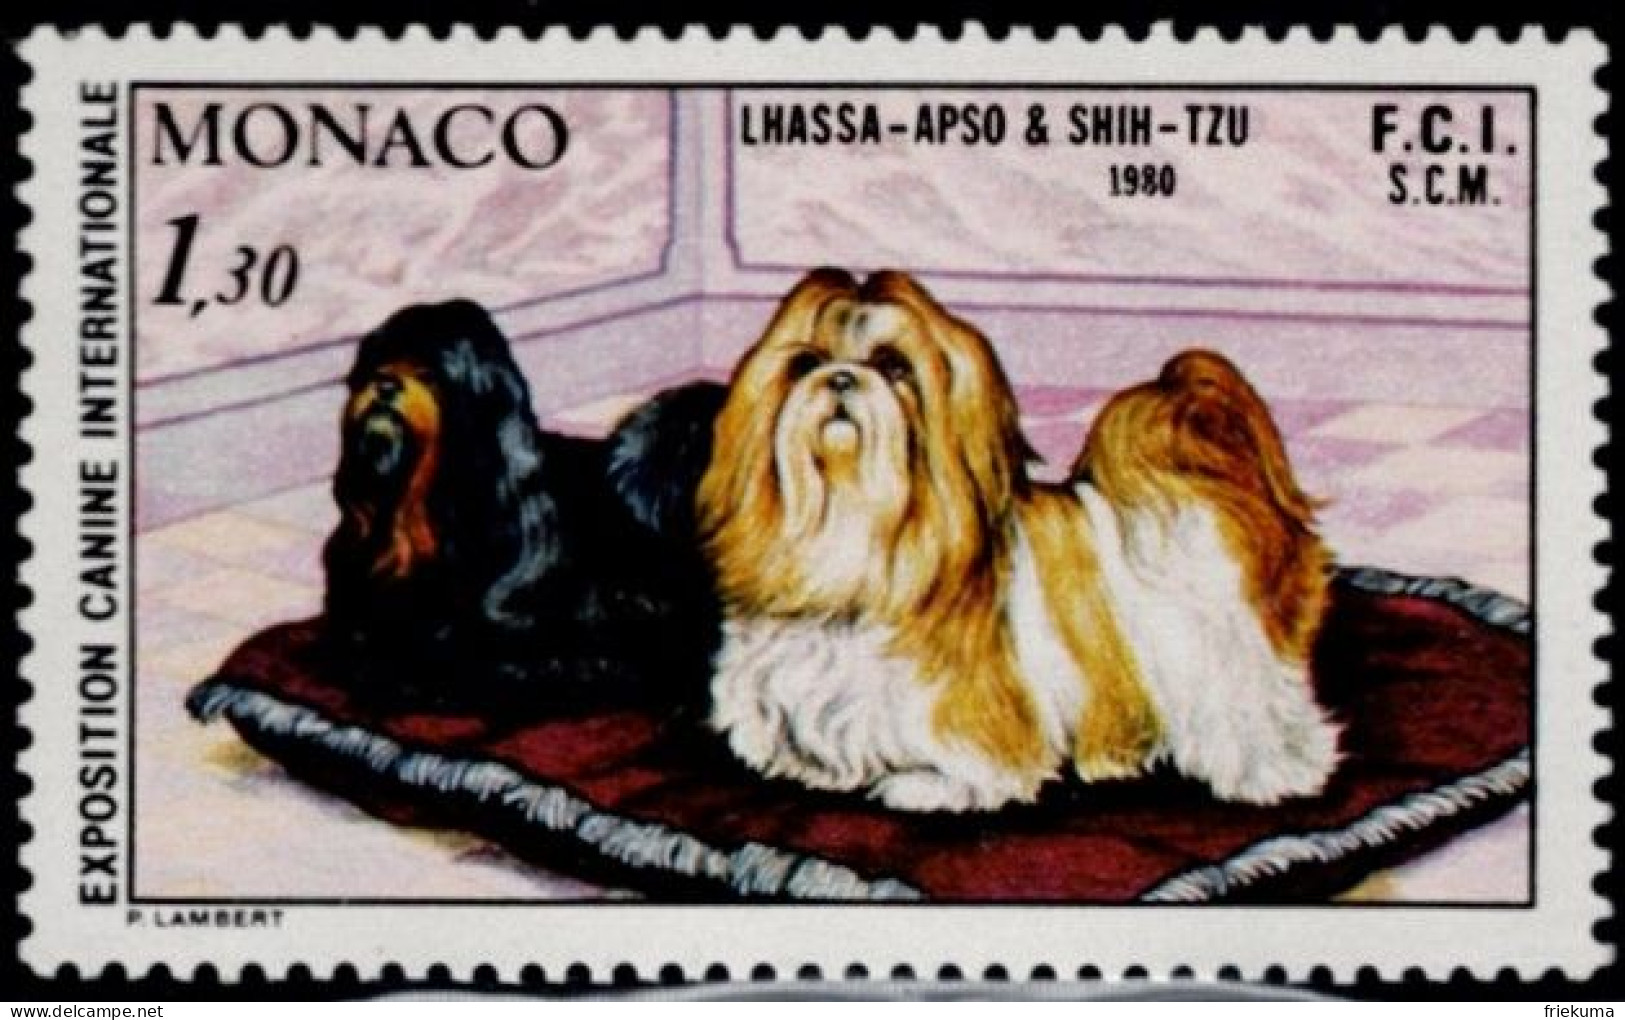 Monaco 1980, Exposition Canine Internationale/International Dog Show, Monte Carlo: Lhasa-Apso And Shih-Tzu, MiNr. 1035 - Honden